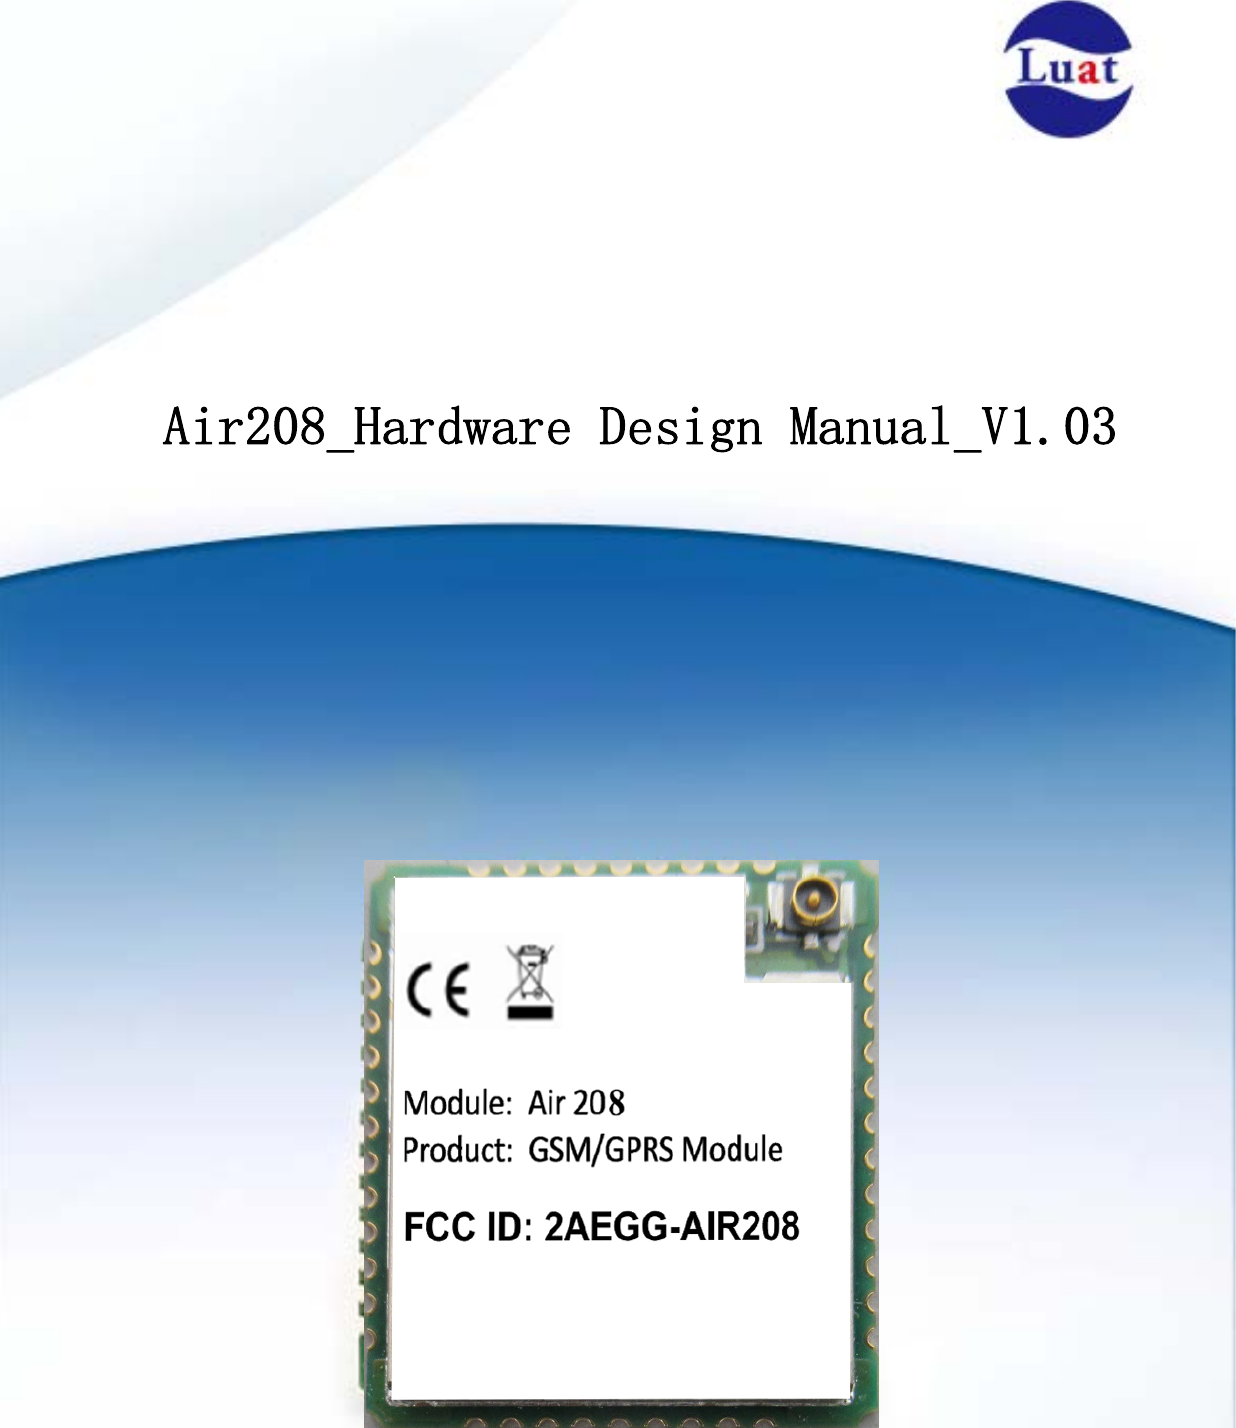 Air208_Hardware Design Manual_V1.03